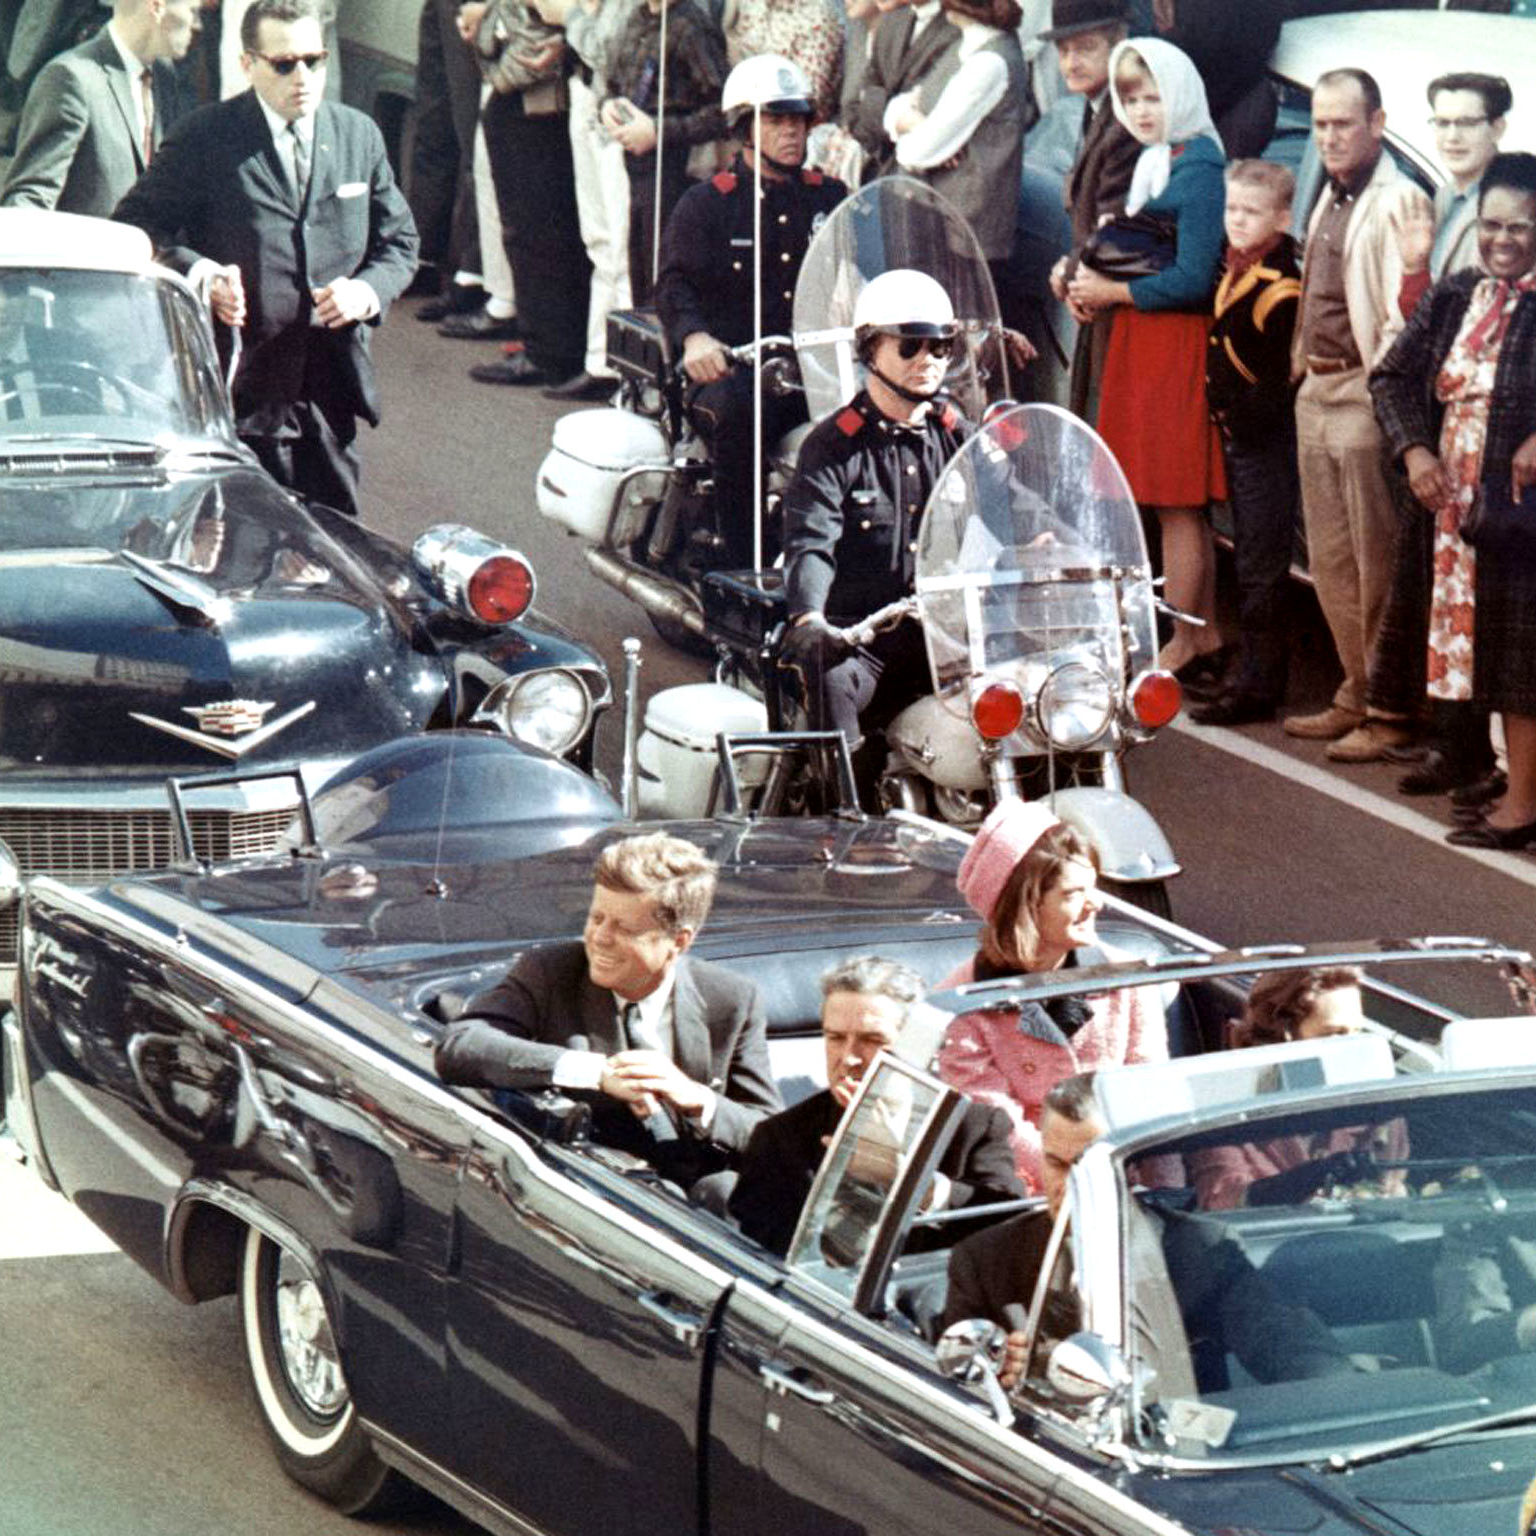 JFK Assassination Tour